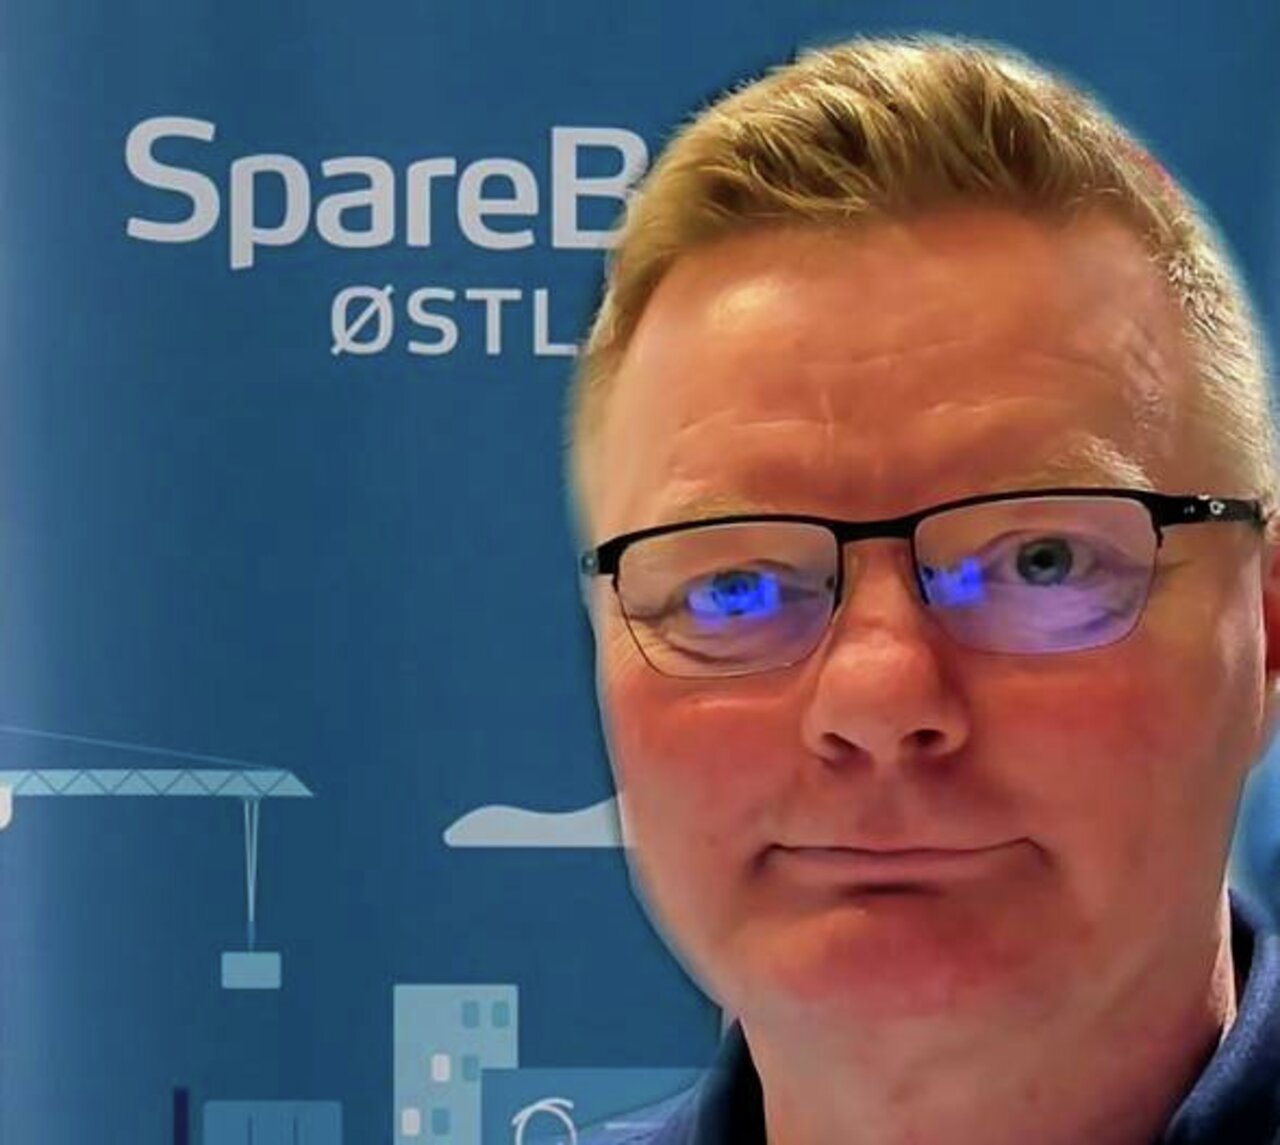 Svein Frode Skarhol er ansatt i Sparebank 1 Østlandet. Han jobber med medlemsfordeler i LOfavør